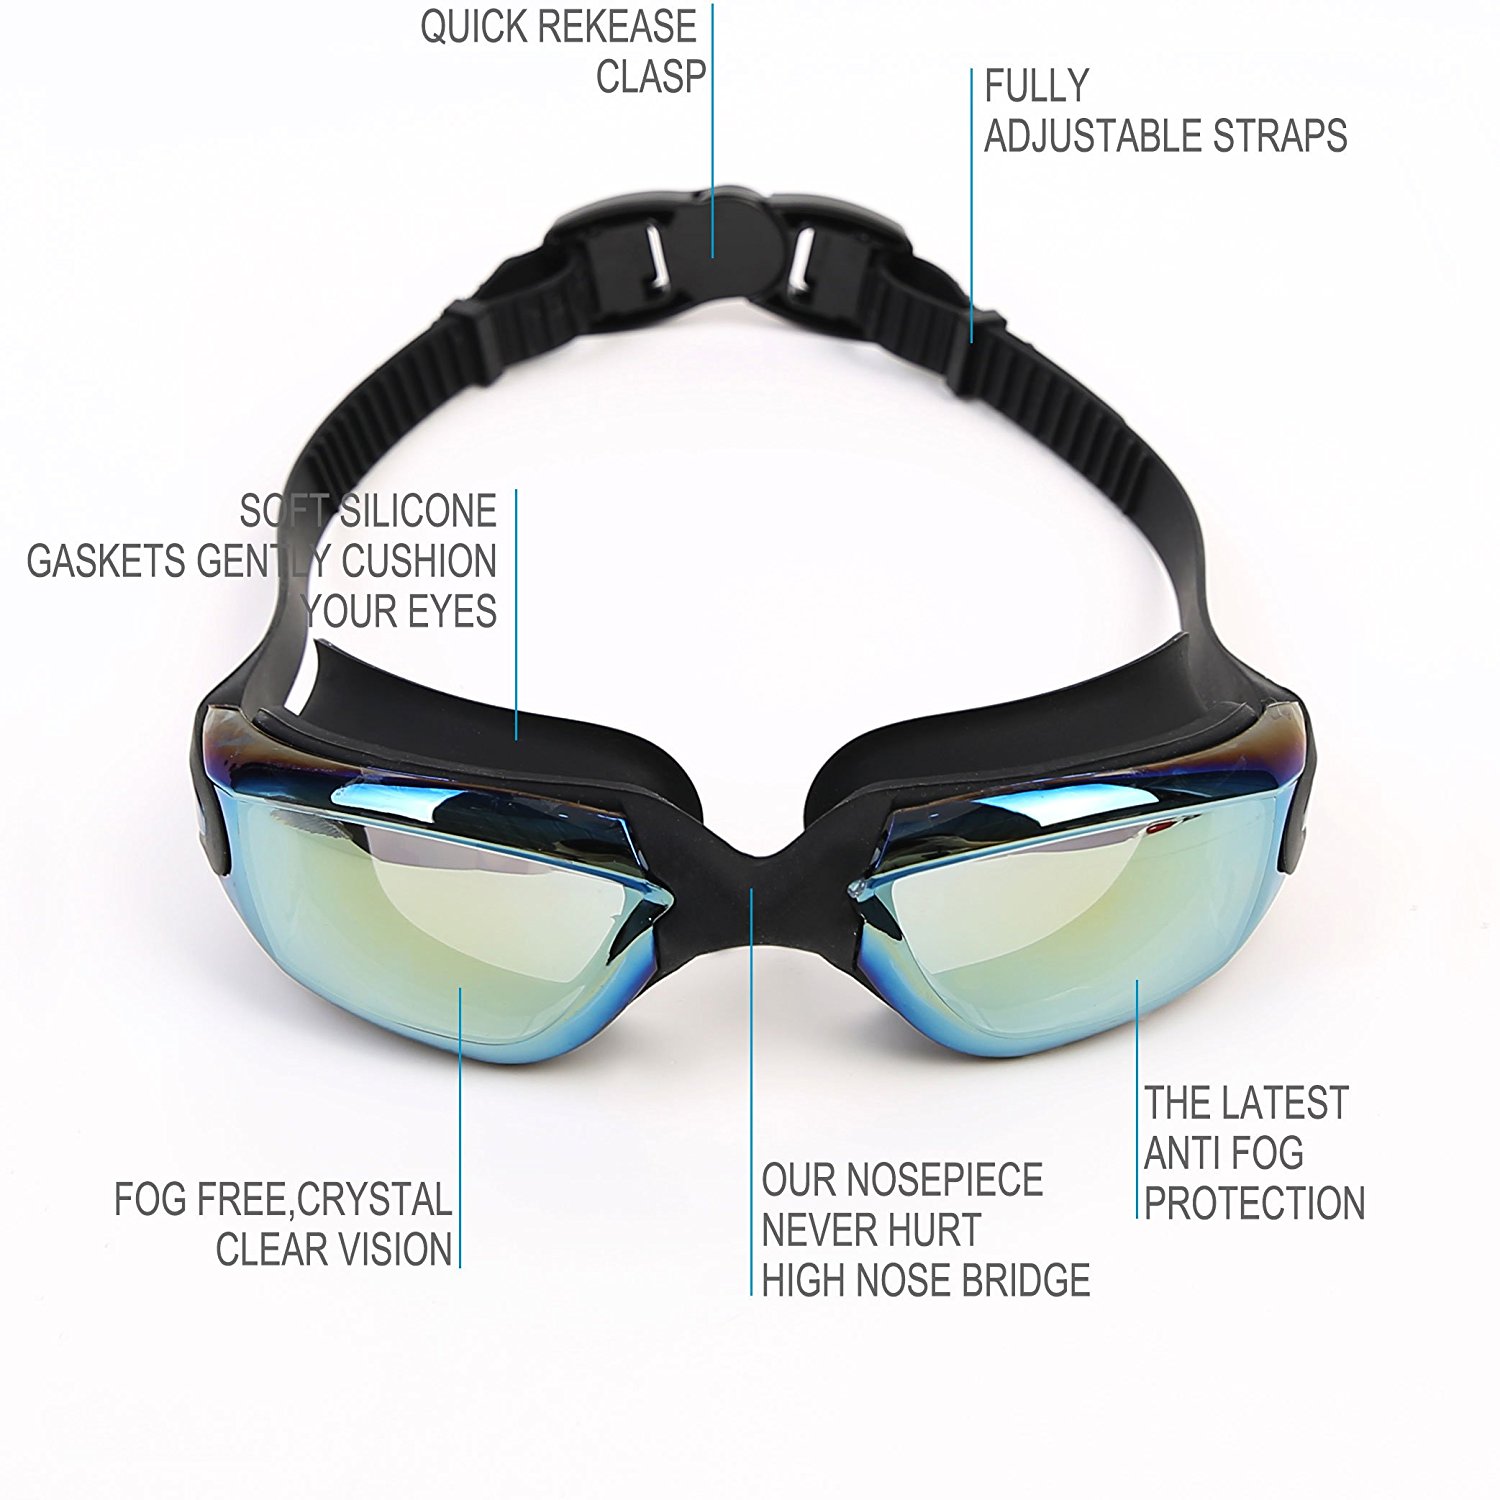 Ohs1 Details about   Best Adult Anti-fog UV Swimming Glasses Adjustable Nose Clip show original title 